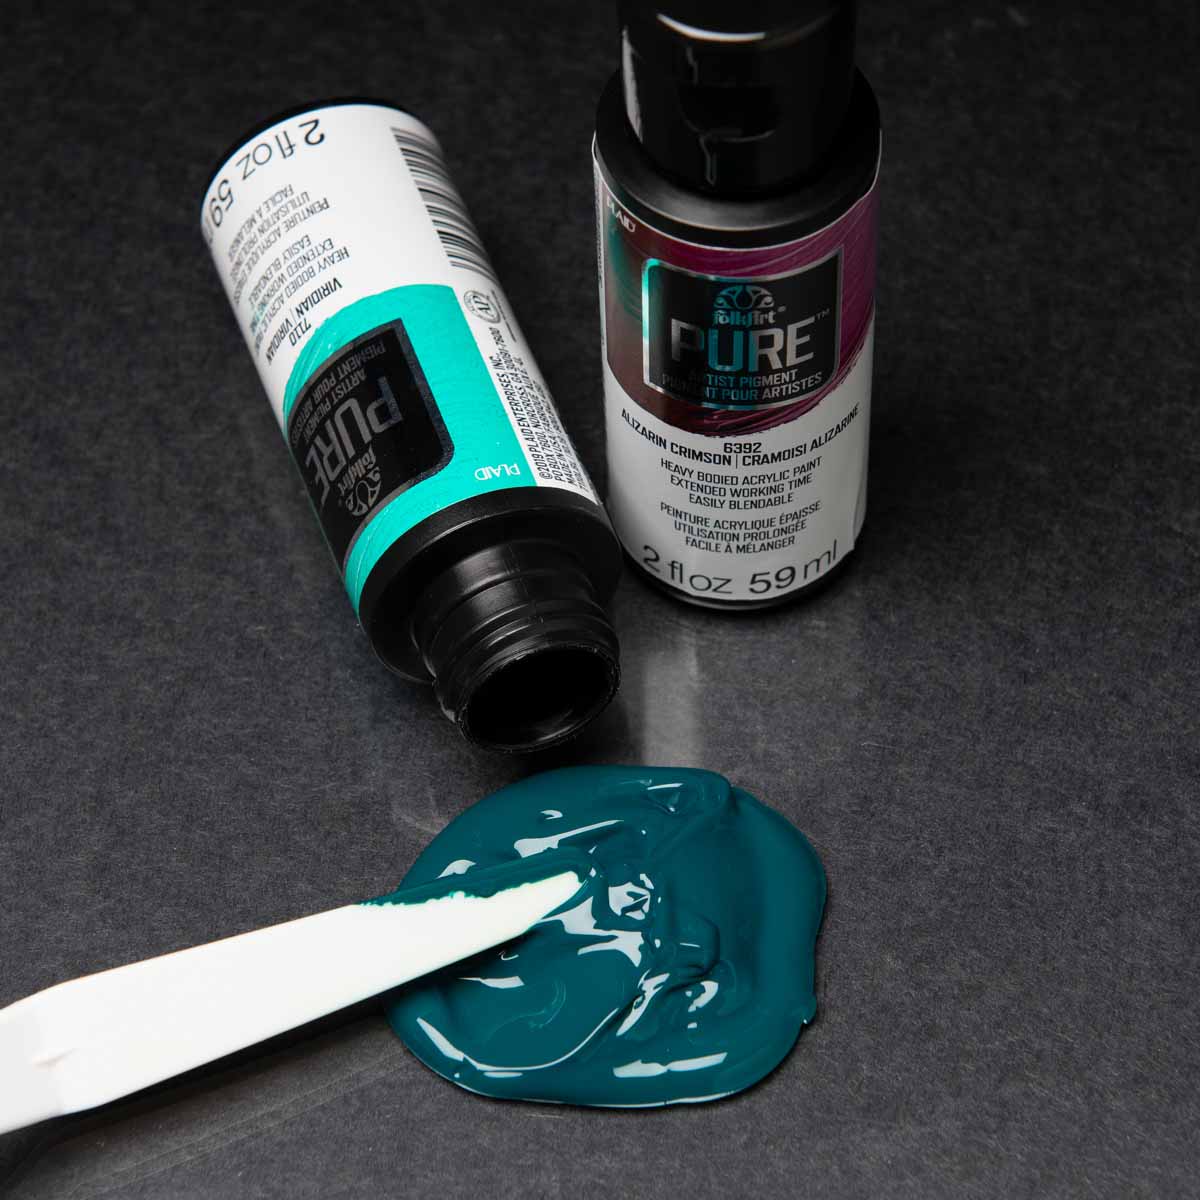 FolkArt ® Pure™ Artist Pigment - Viridian, 2 oz. - 7110